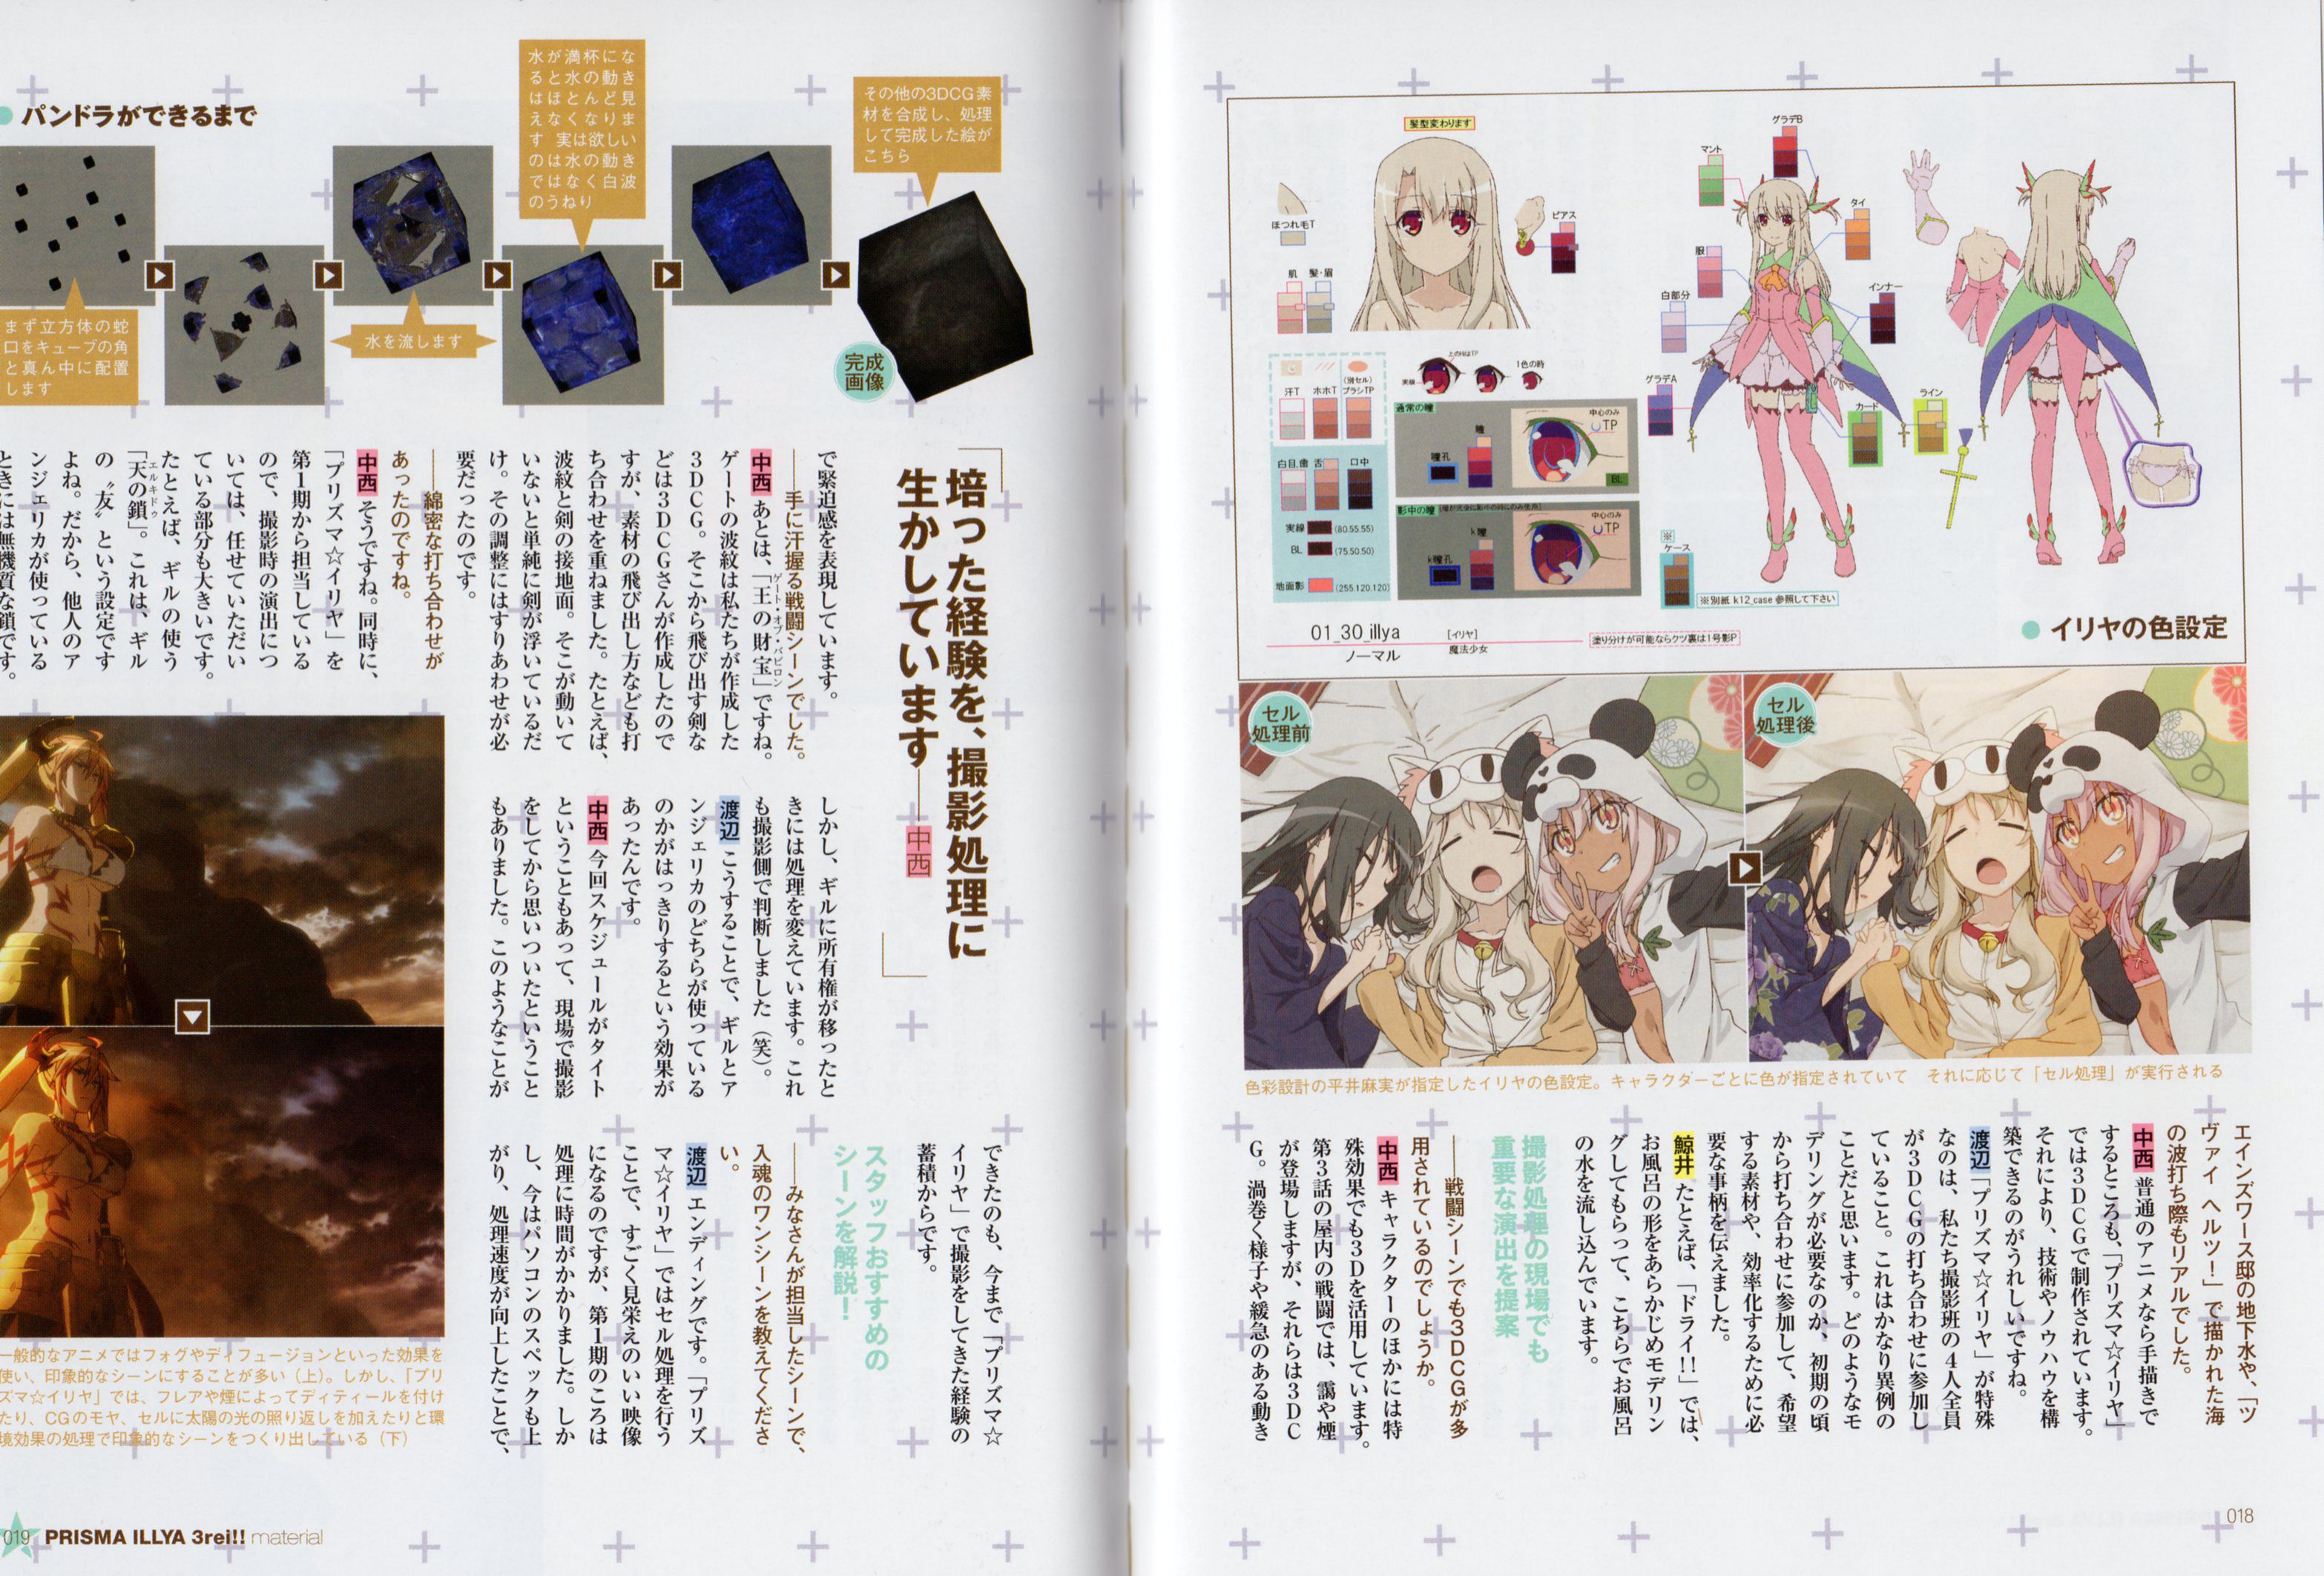 Fate/kaleid liner Prisma ☆ Ilya dry! BD vol. 5 "award animation Nightgown of Erica! reveal a kinky night dolls of sleeping! 」 120